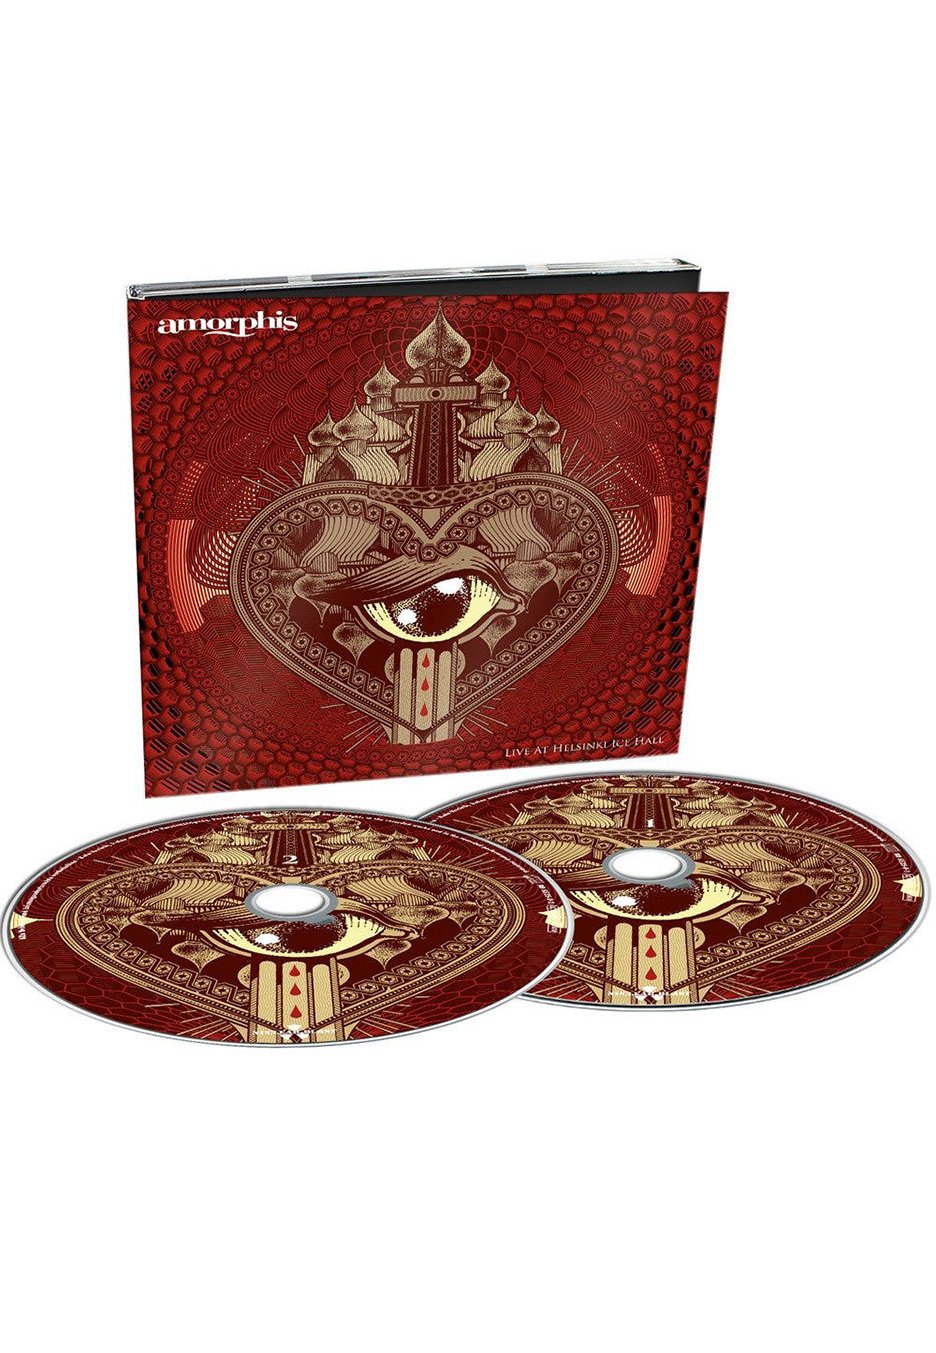 Amorphis - Live At Helsinki Ice Hall - Digipak 2 CD